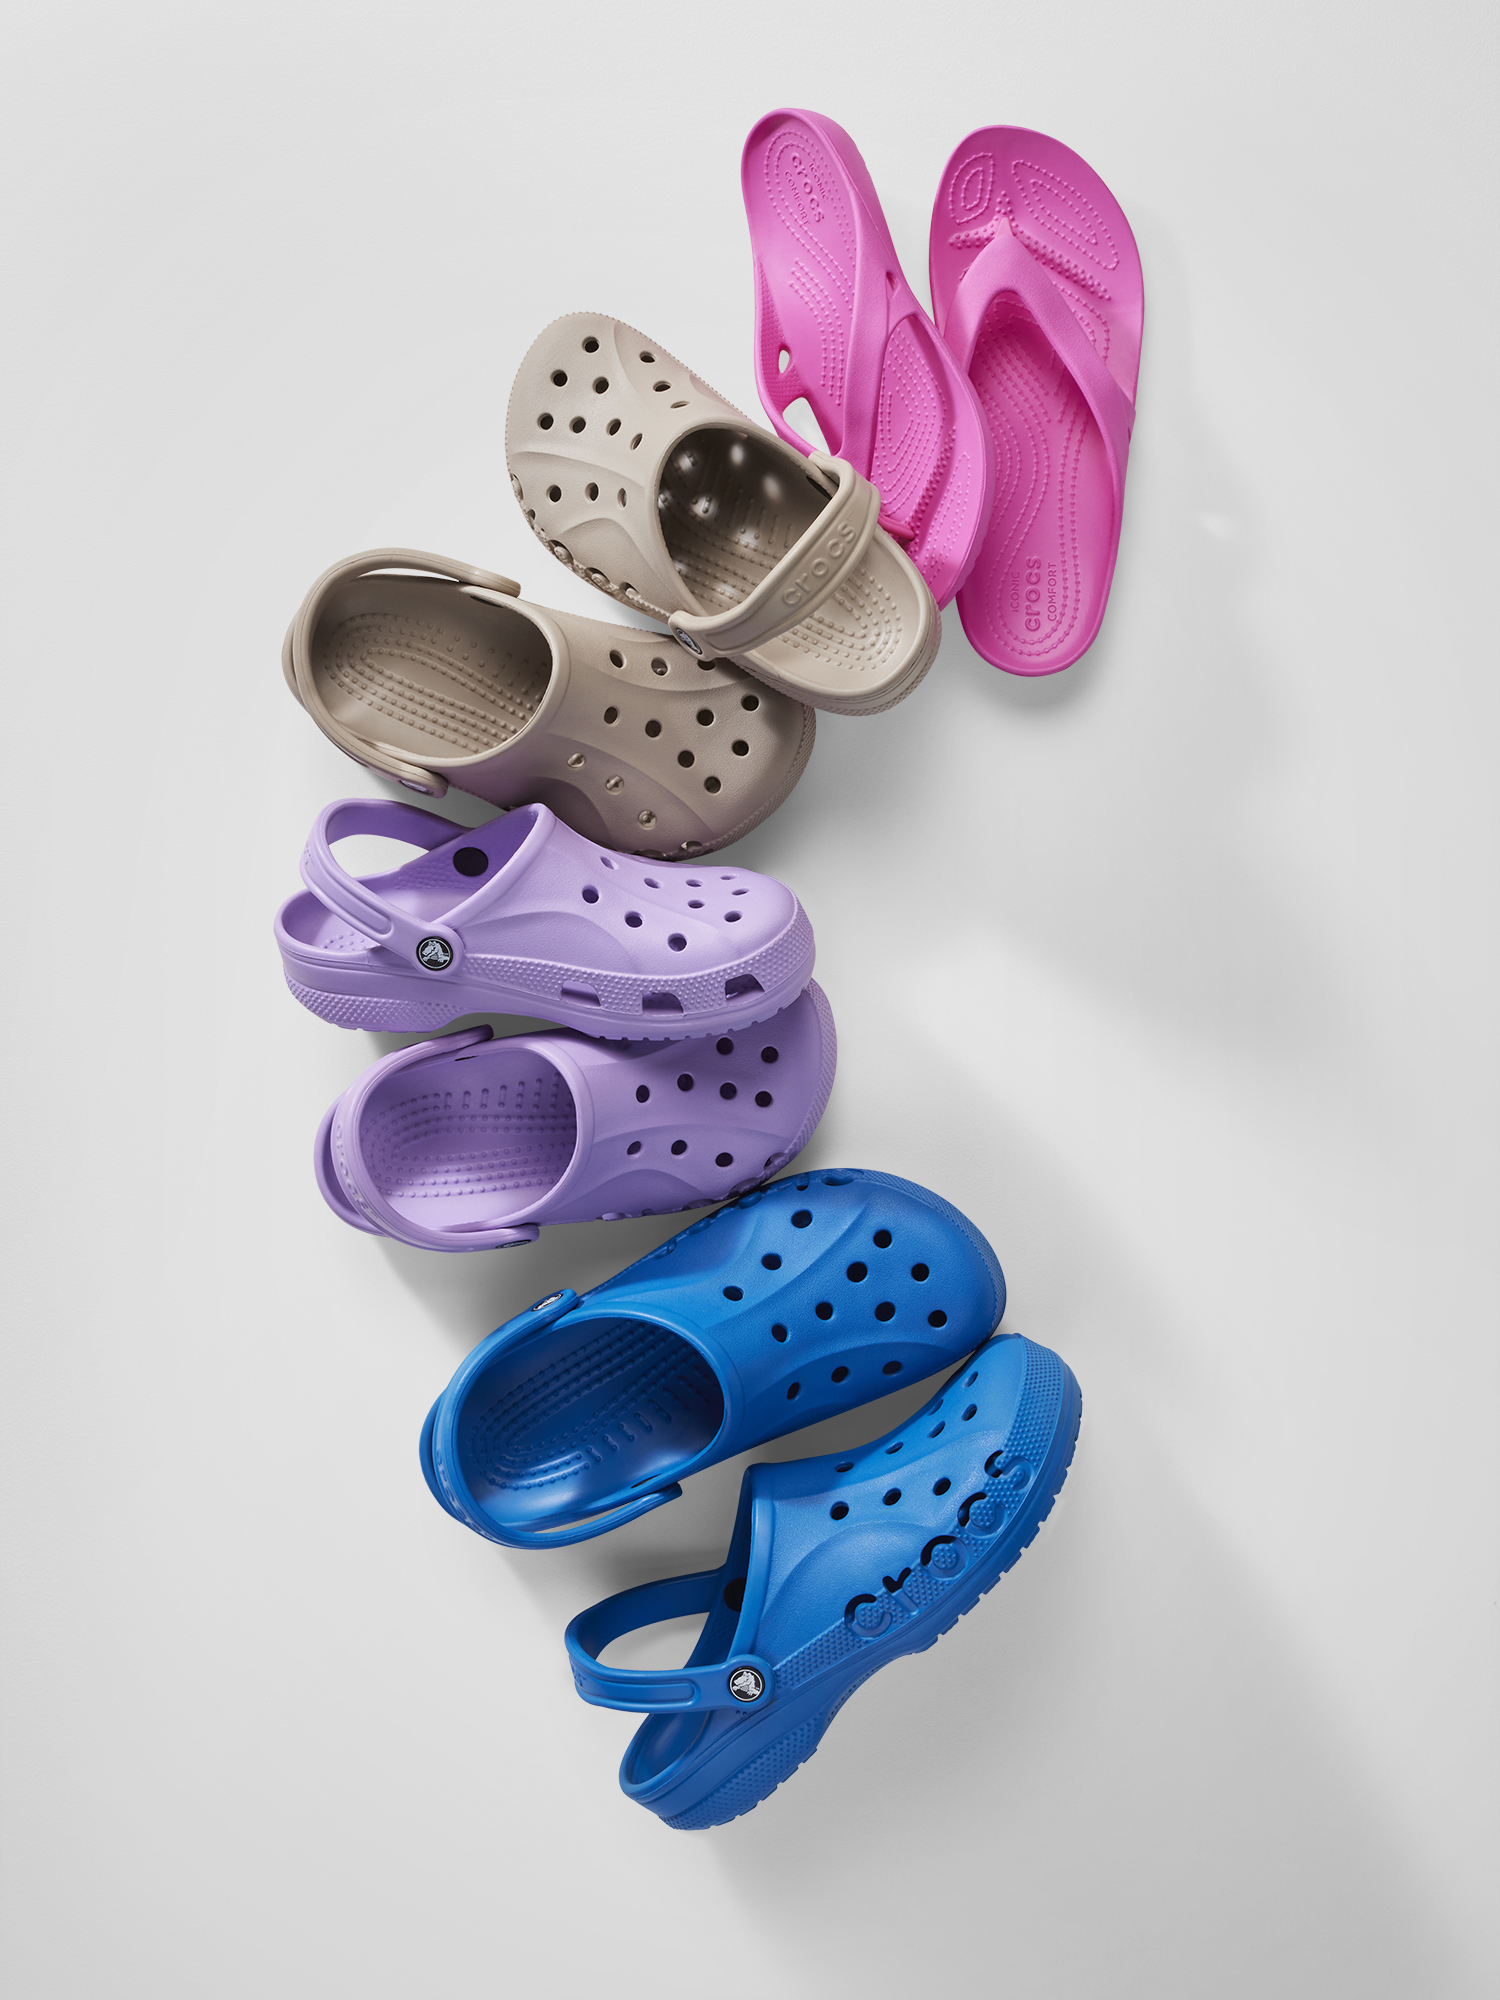 Crocs Men's and Women's Unisex Baya Clog Sandals - image 2 of 7